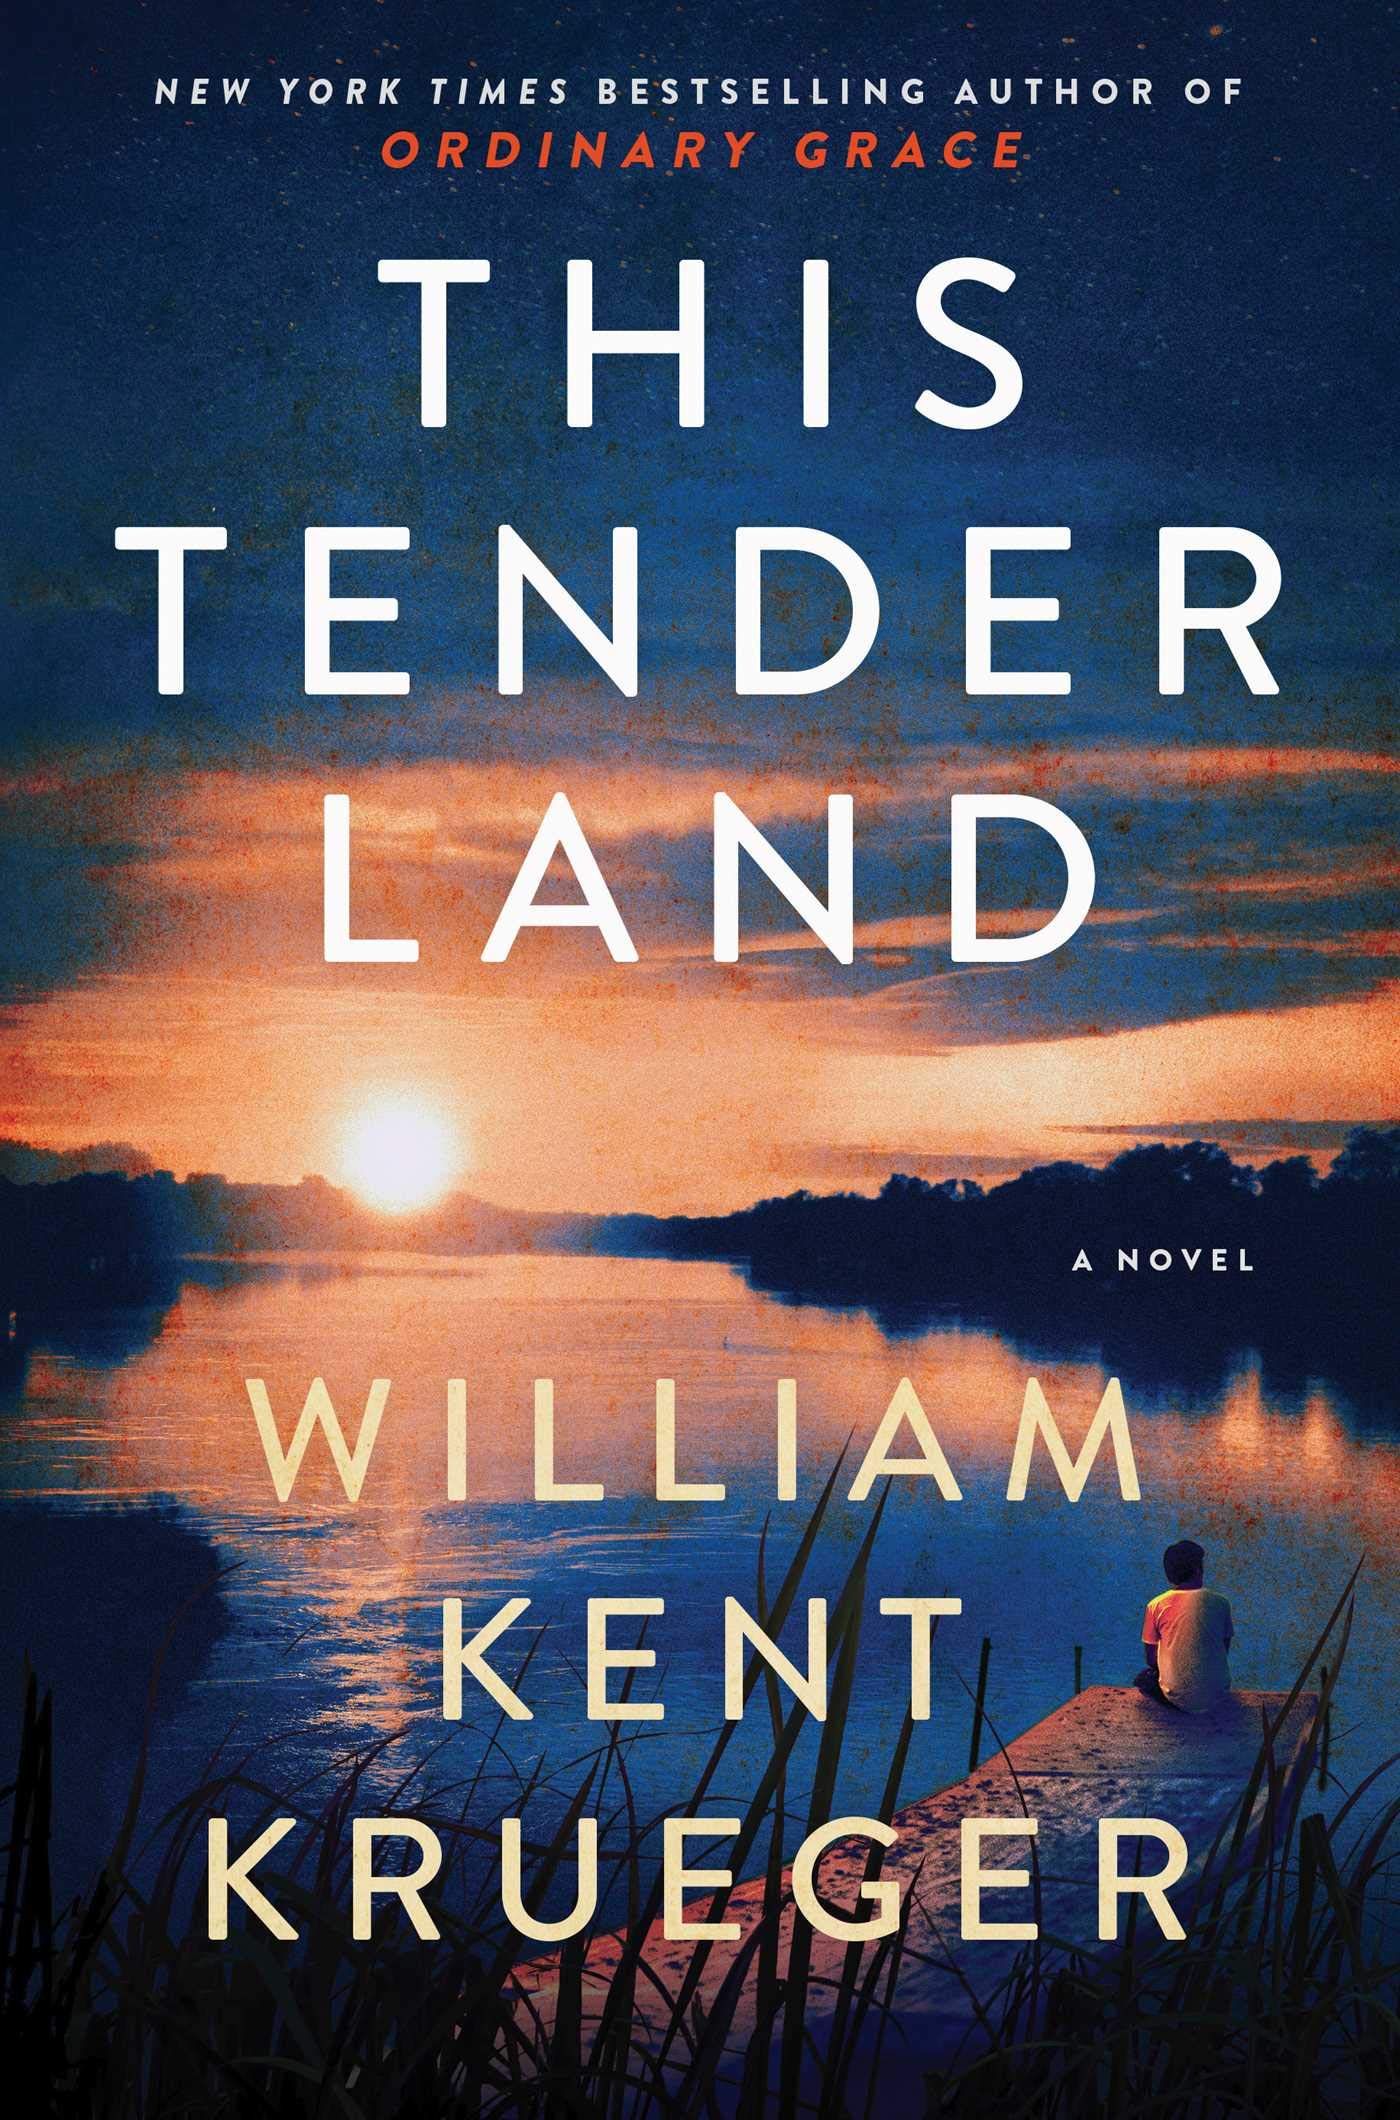 This Tender Land - William Kent Krueger